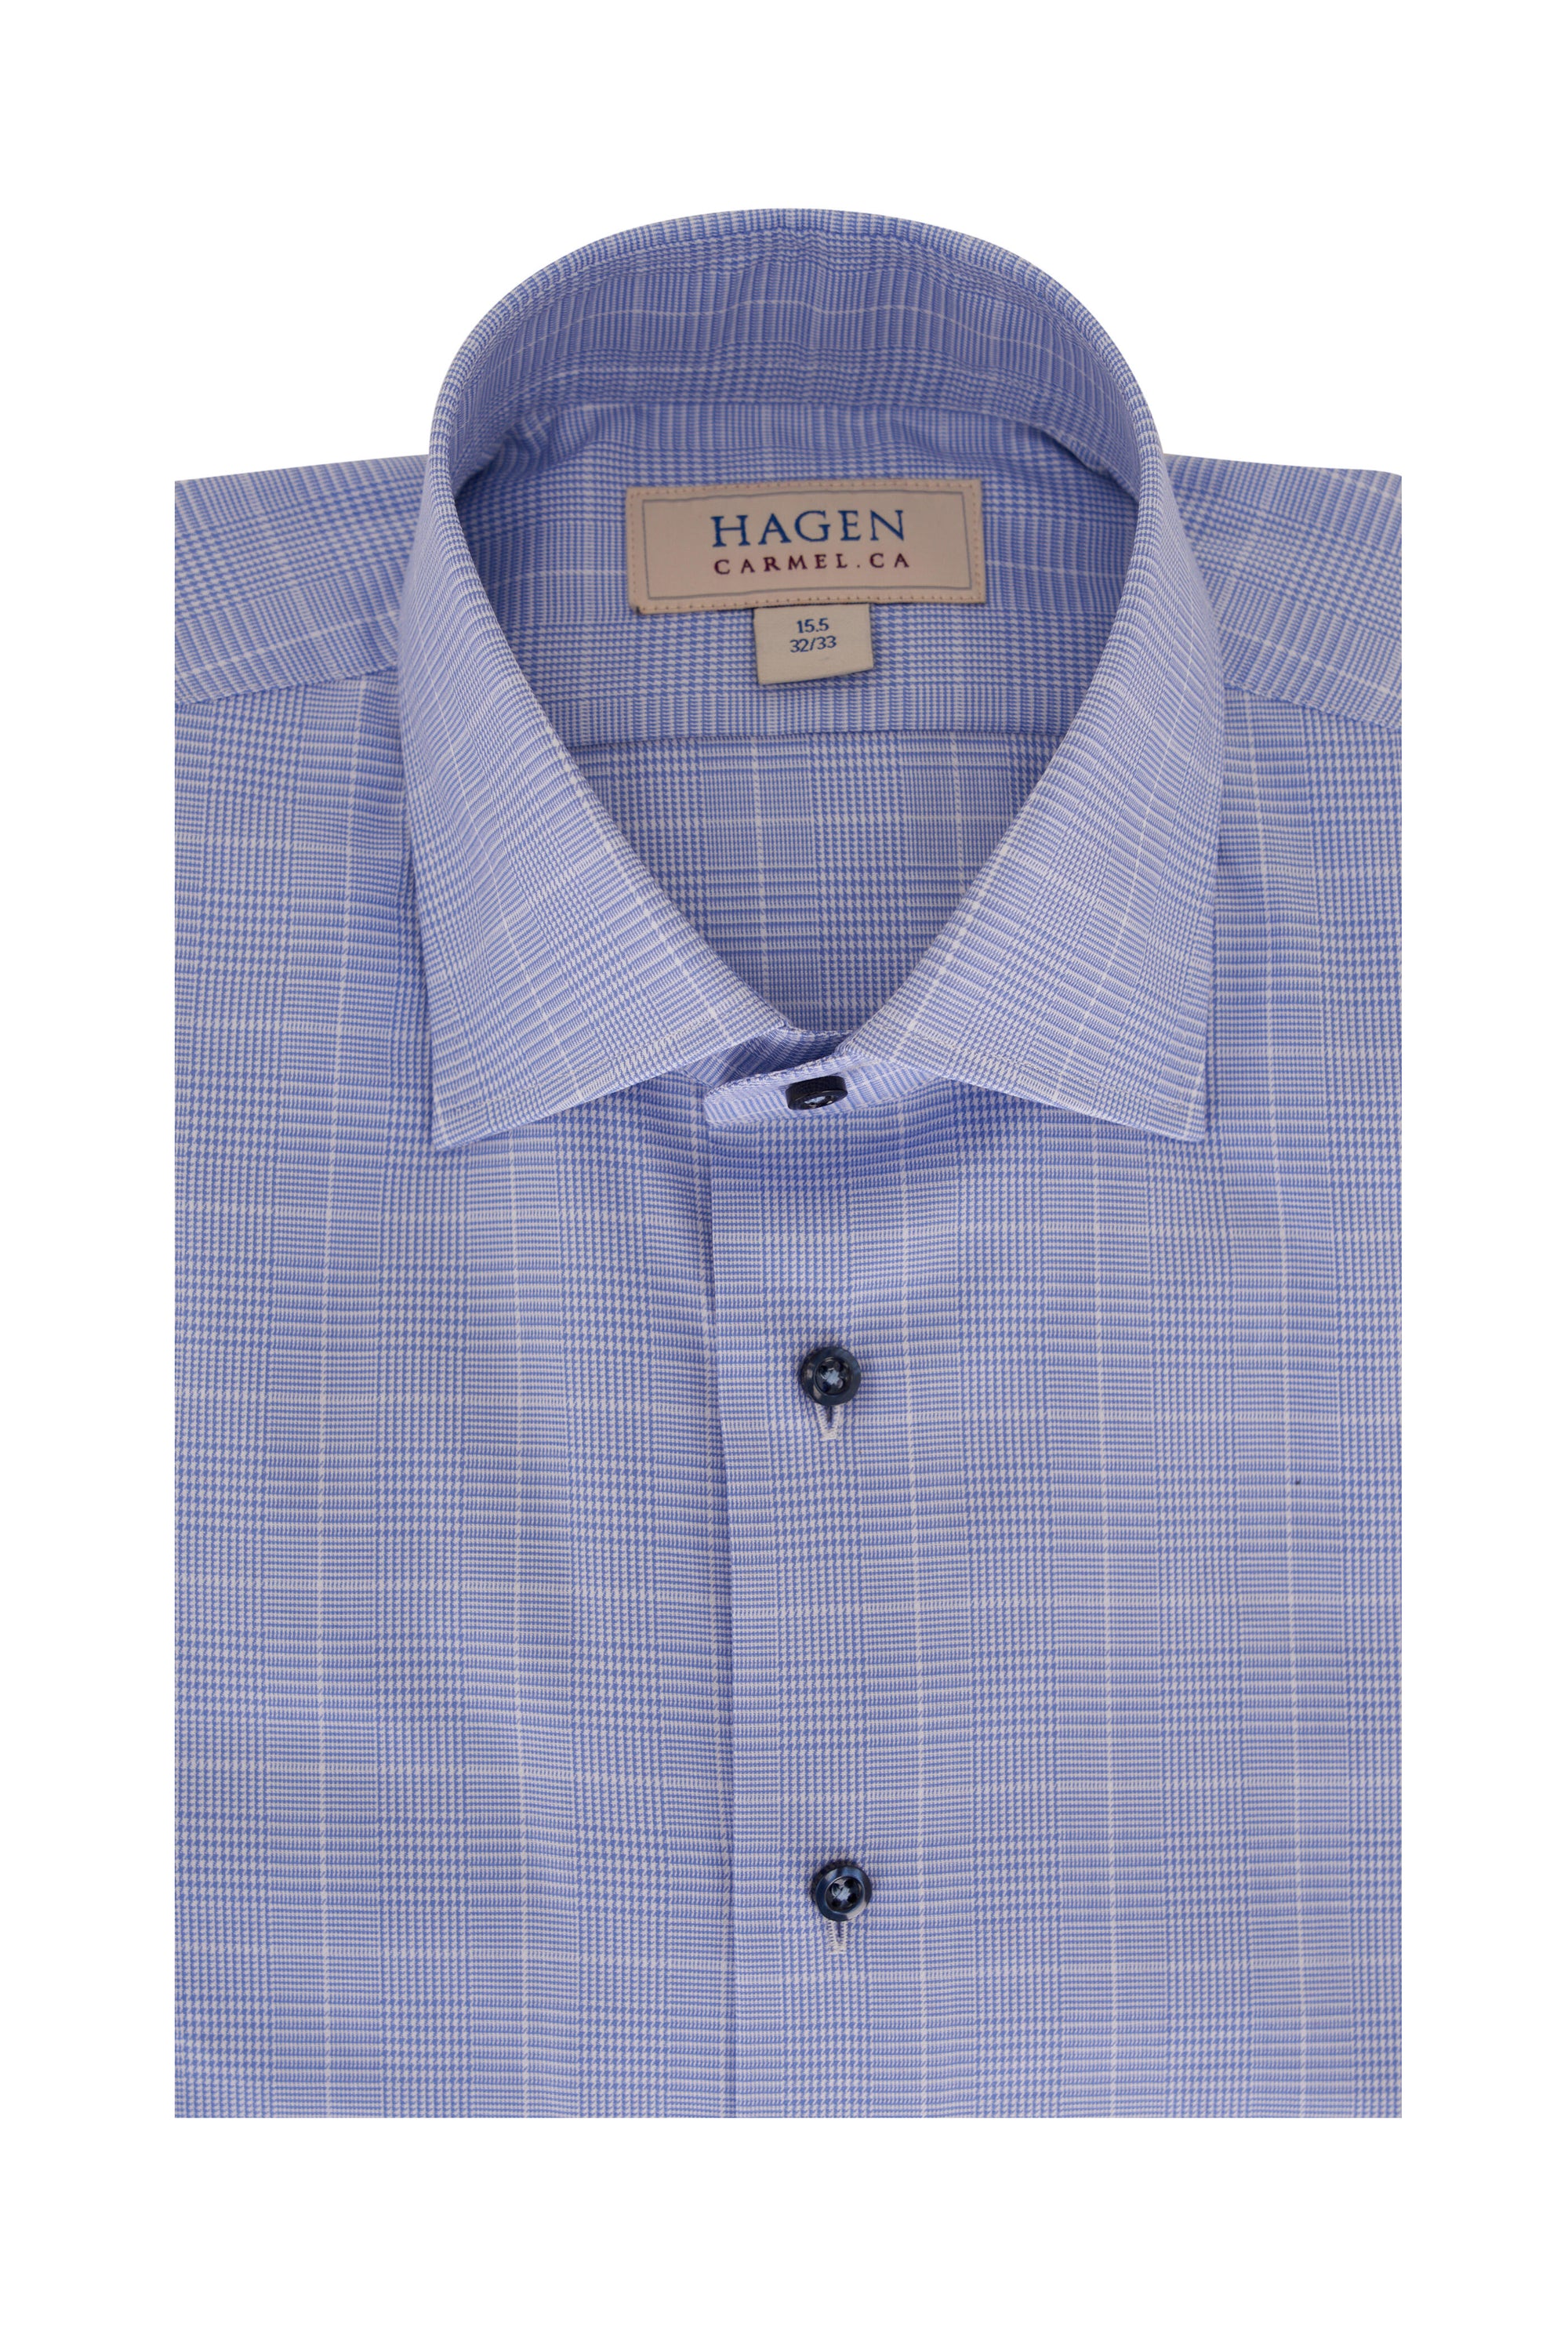 Hagen Blue Prince of Wales Cotton Dress Shirt